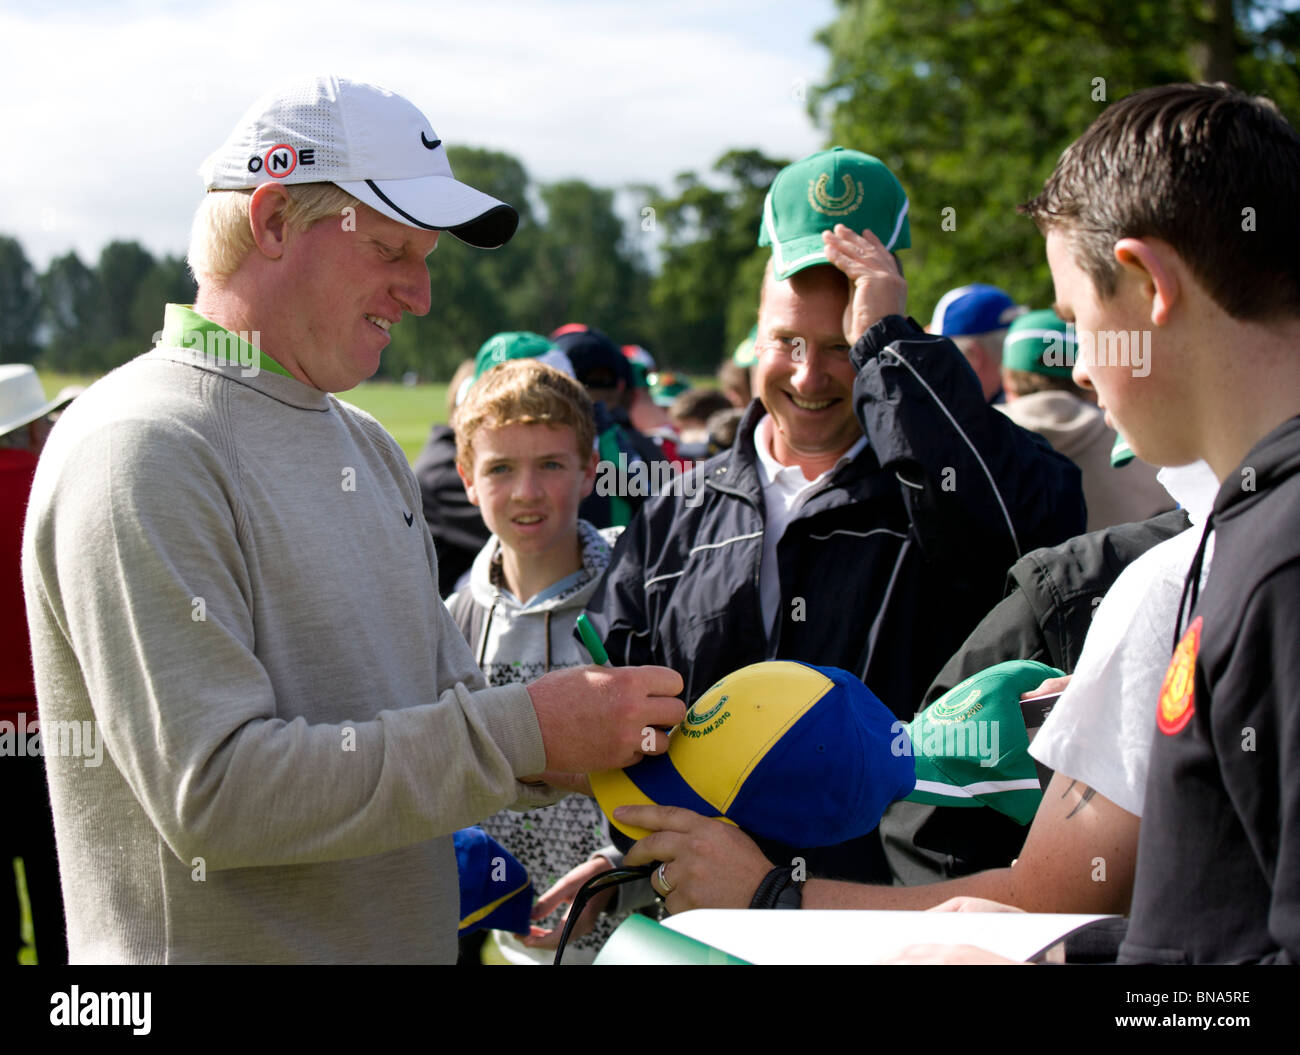 John Daly at JP McManus Pro-Am Golf Tournament, Adare Ireland 6th July 2010 Stock Photo